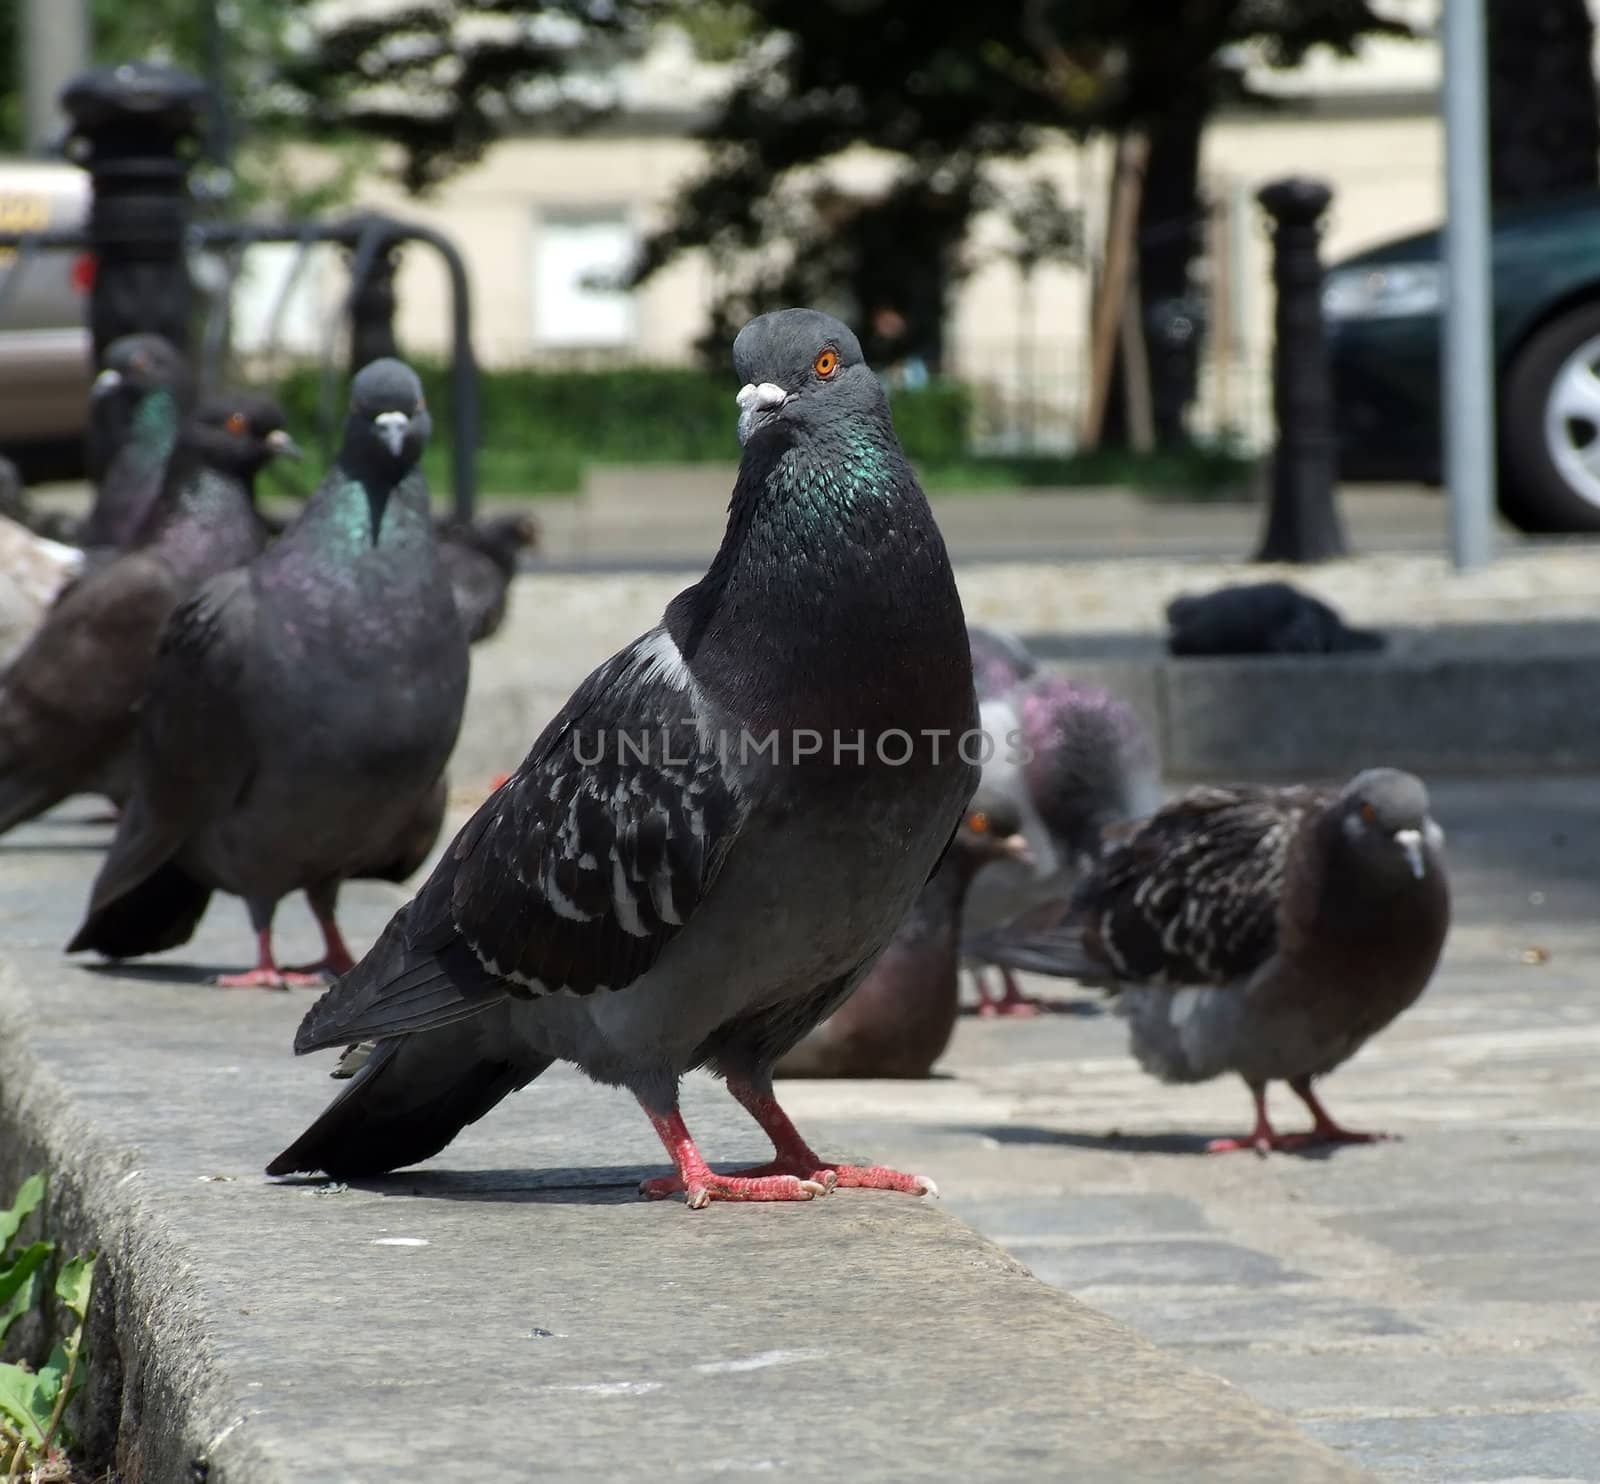 pigeons by anki21